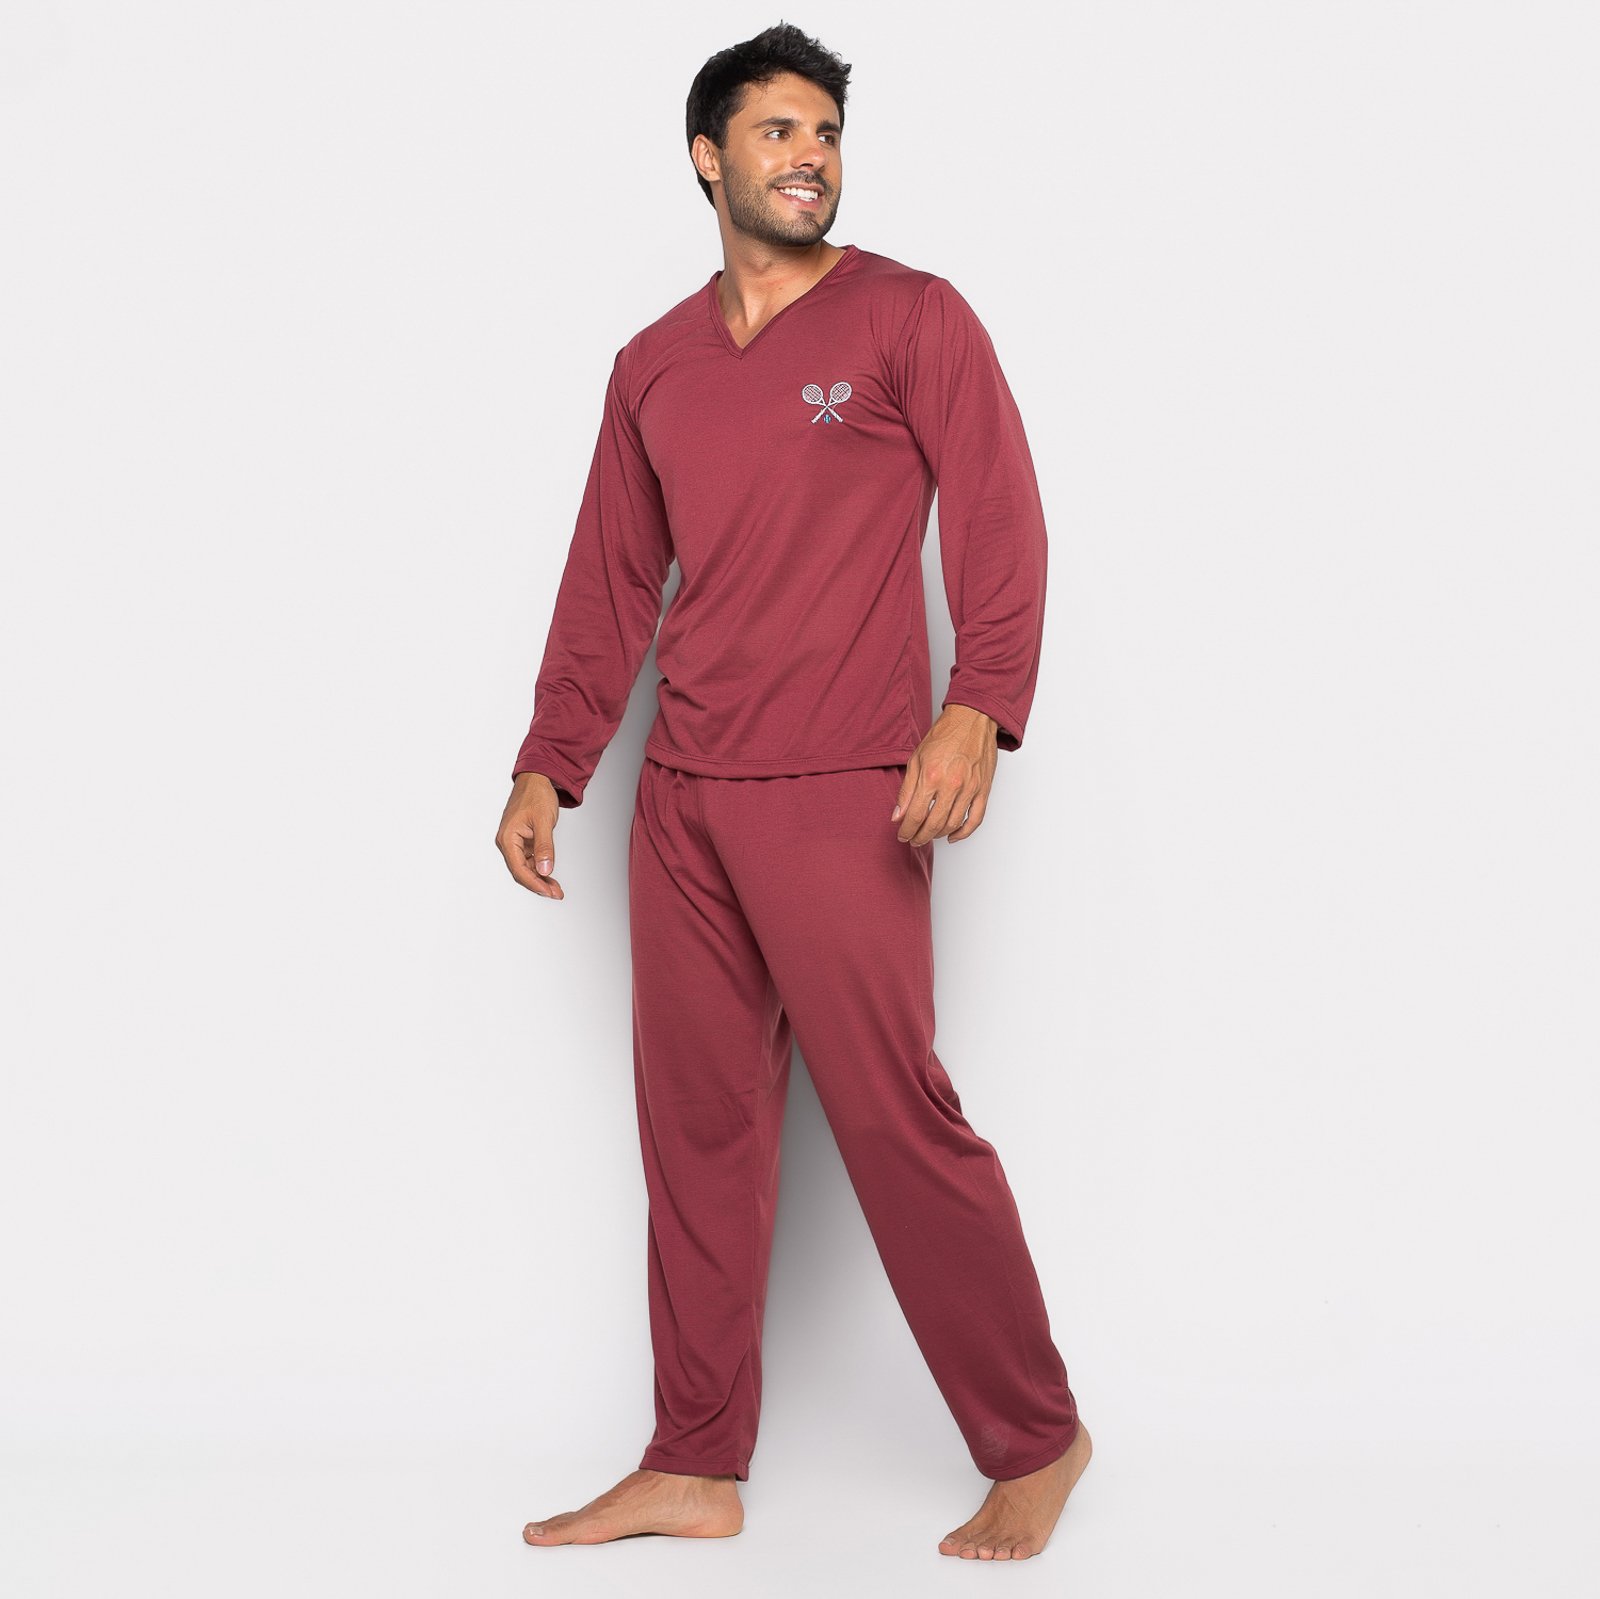 Pijama Longo Adulto Masculino Blusa Manga Comprida Calca 009 Vinho Vermelho 1